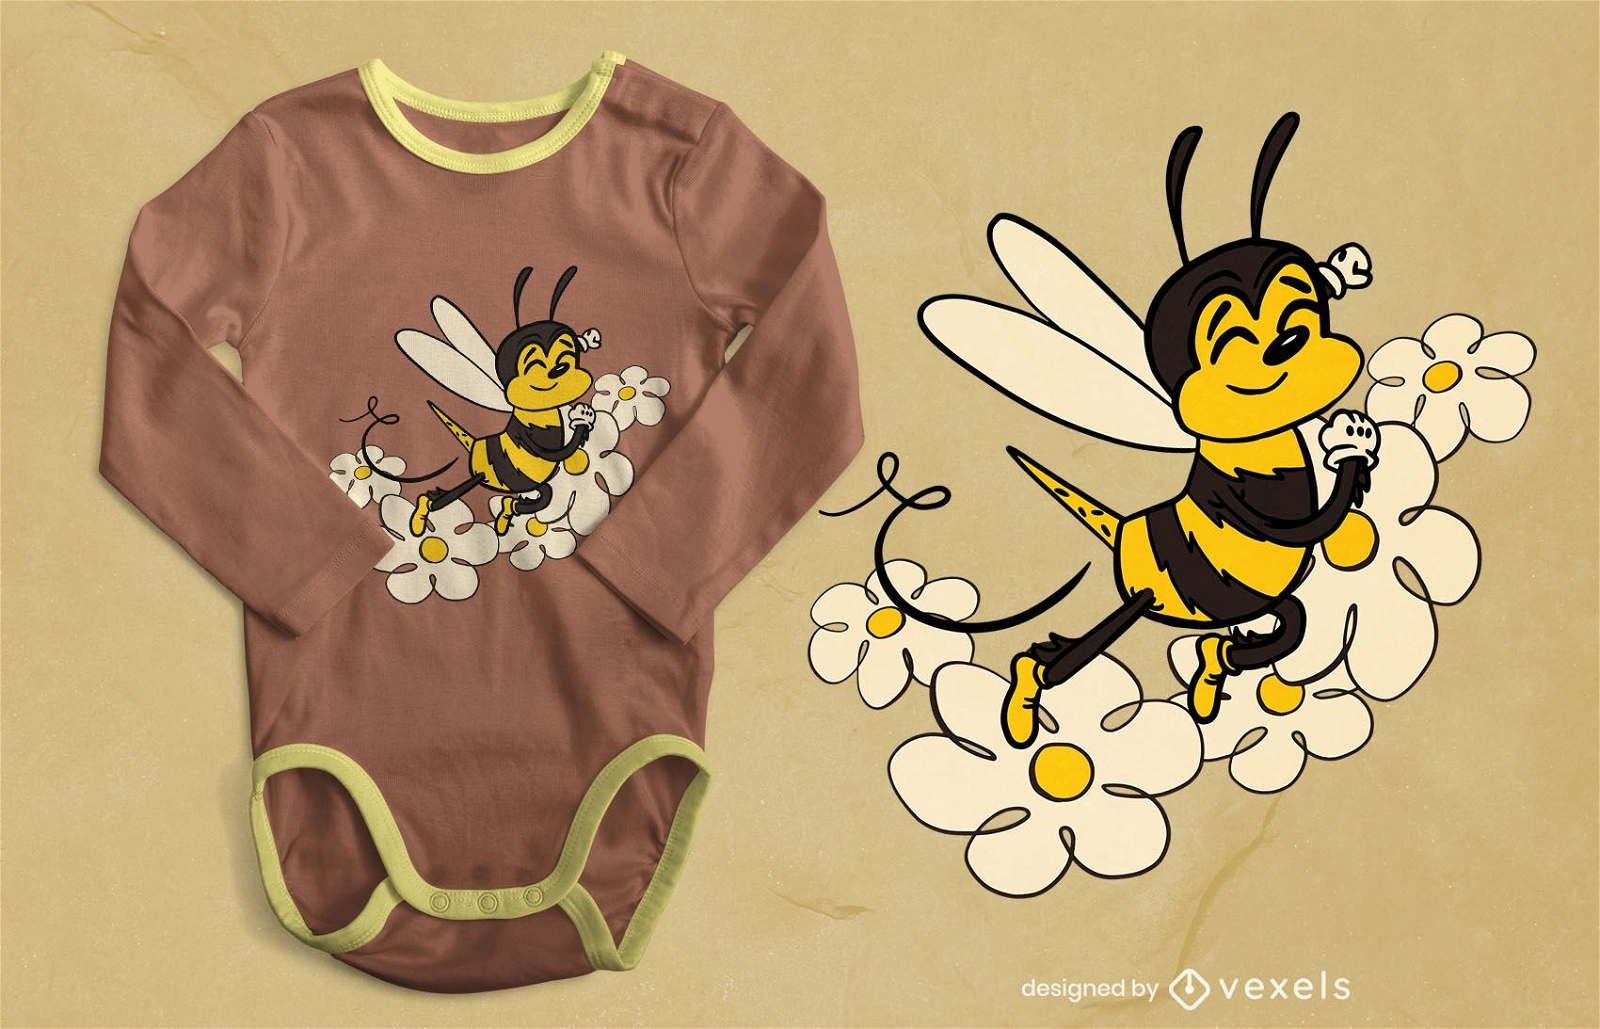 Cute bee baby t-shirt design